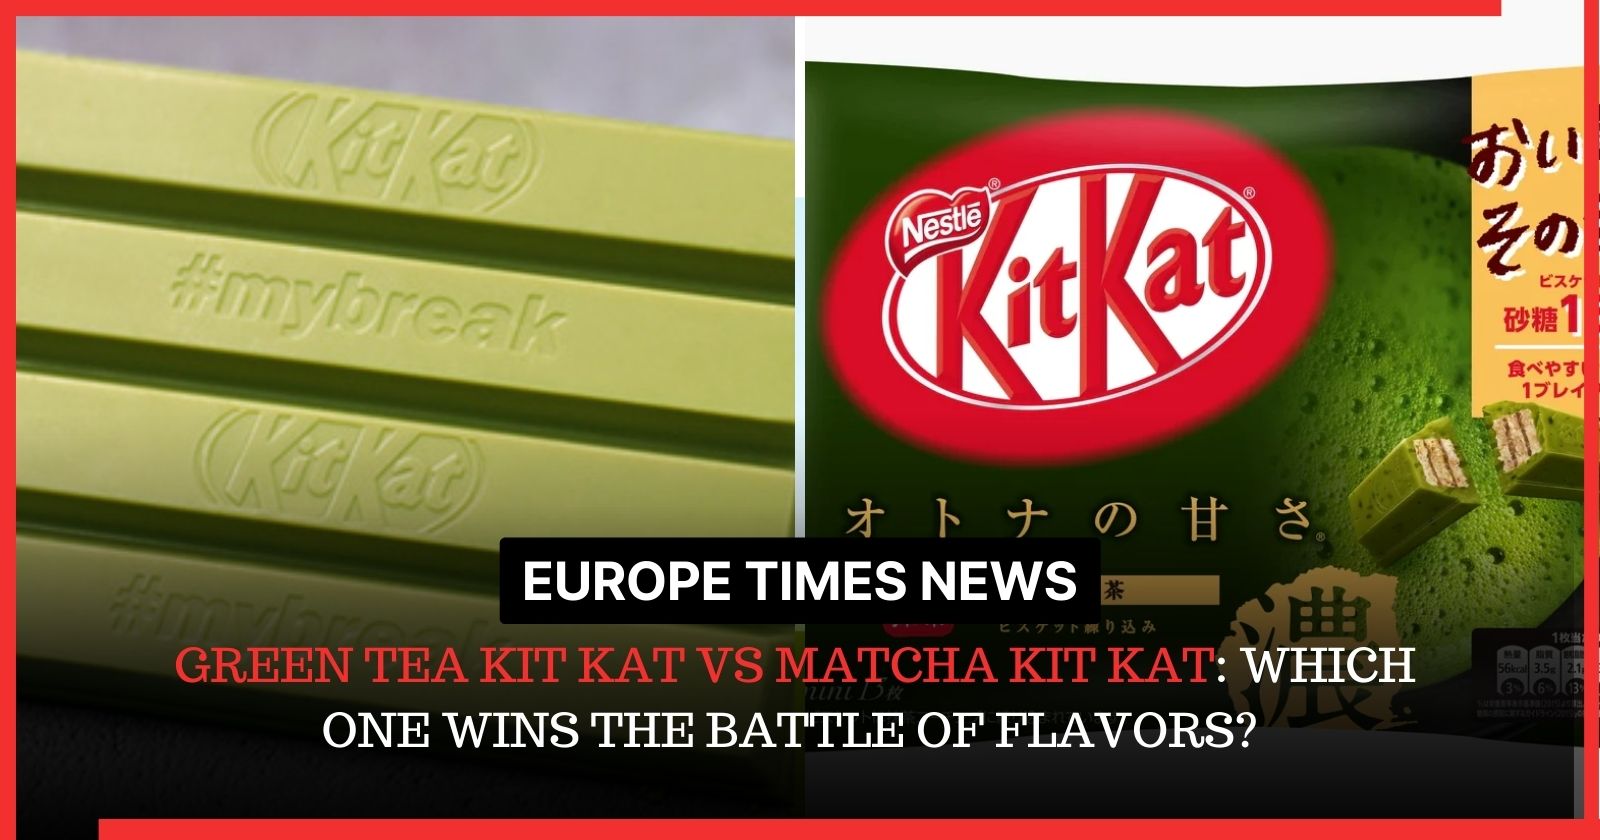 Green Tea Kit Kat vs Matcha Kit Kat: Which One Wins the Battle of Flavors?